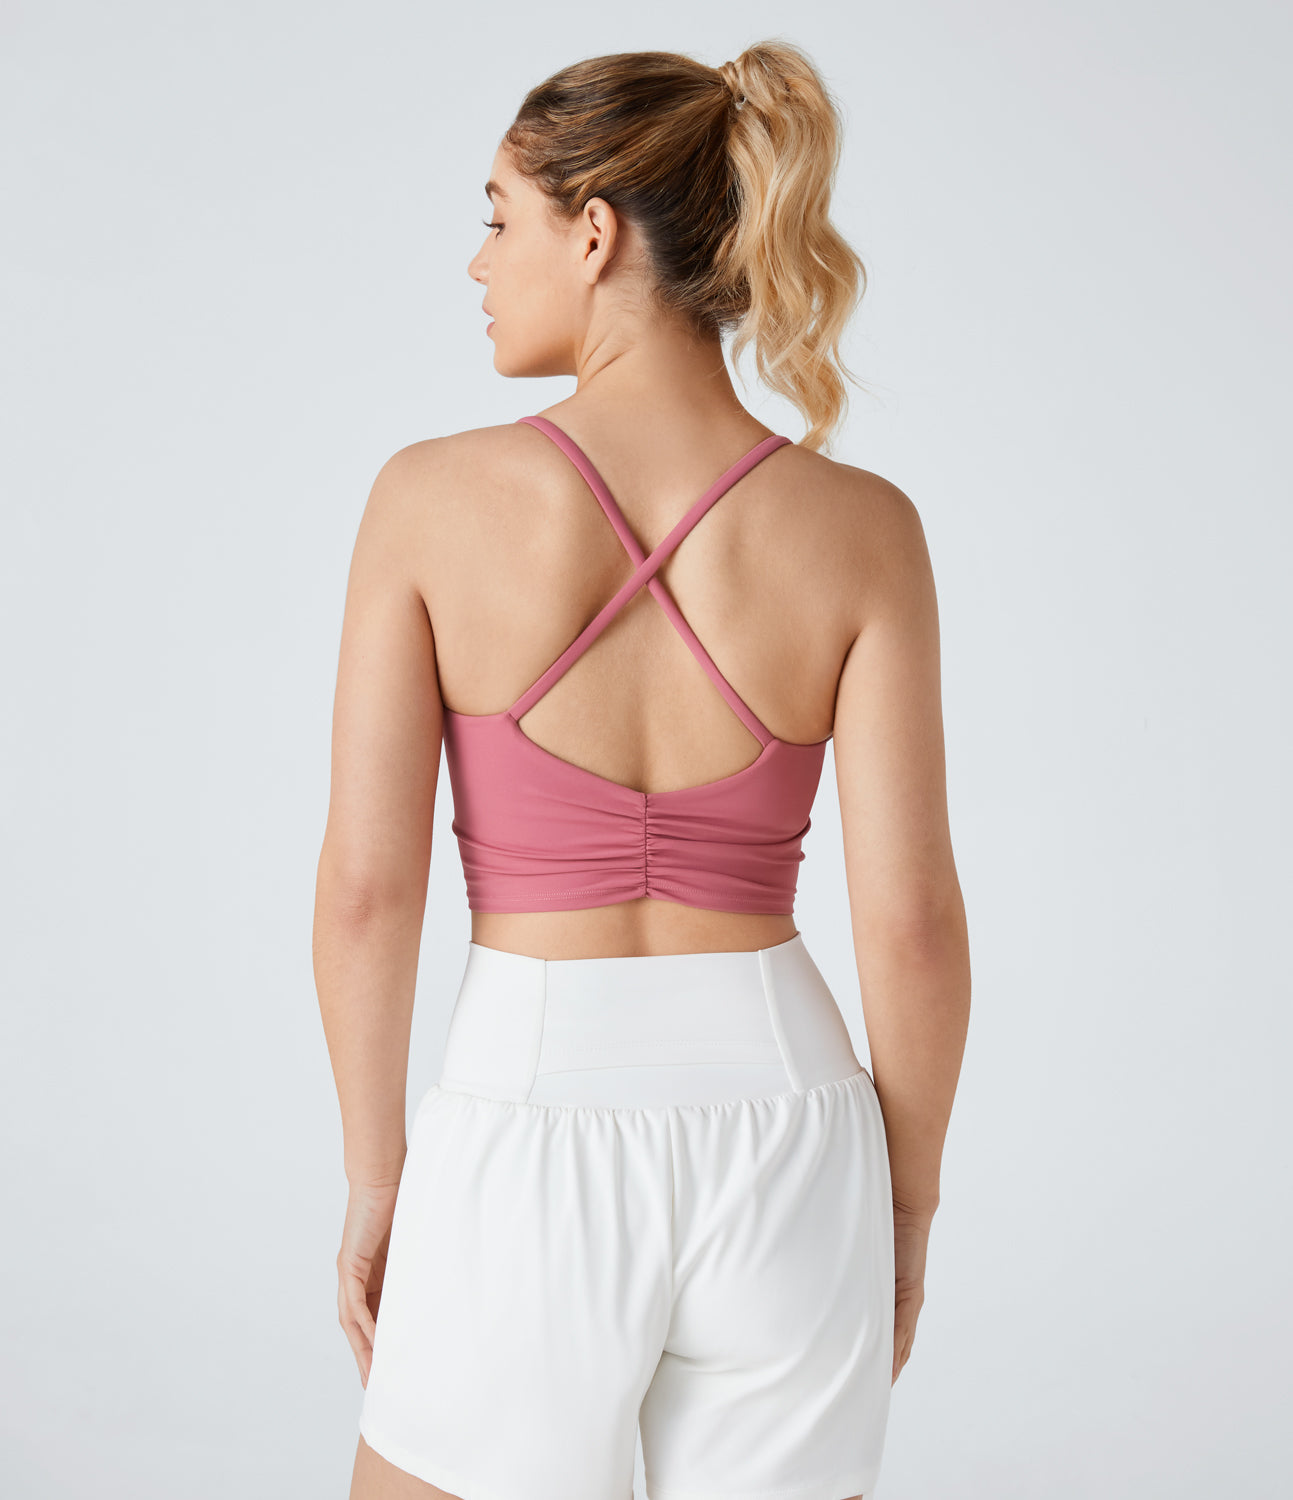 

Halara Backless Crisscross Ruched Skinny Yoga Cami Top Tank Top - Flamingo Plume -  golf tops halter top tunic tops sleeveless tops